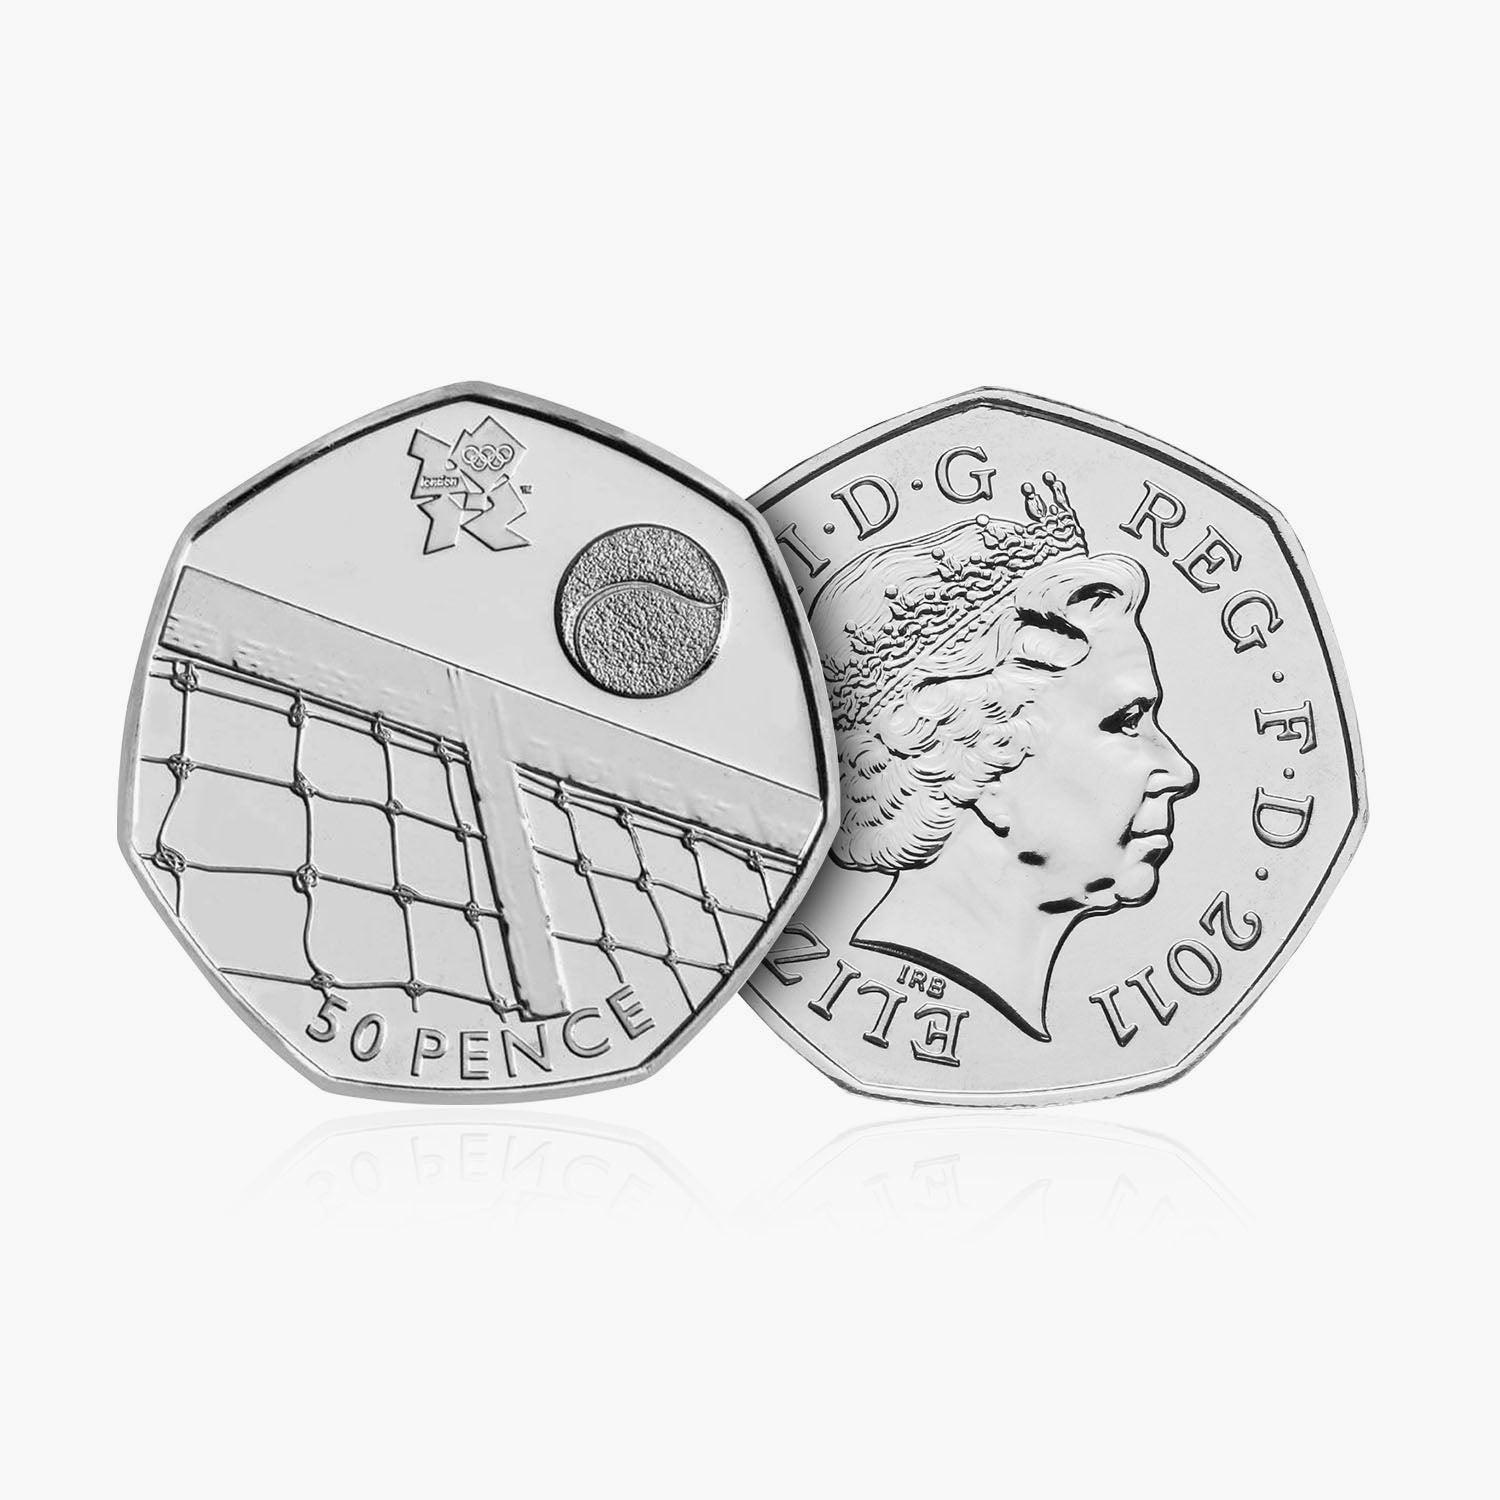 2011 Circulated Olympics - Tennis 50p Coin